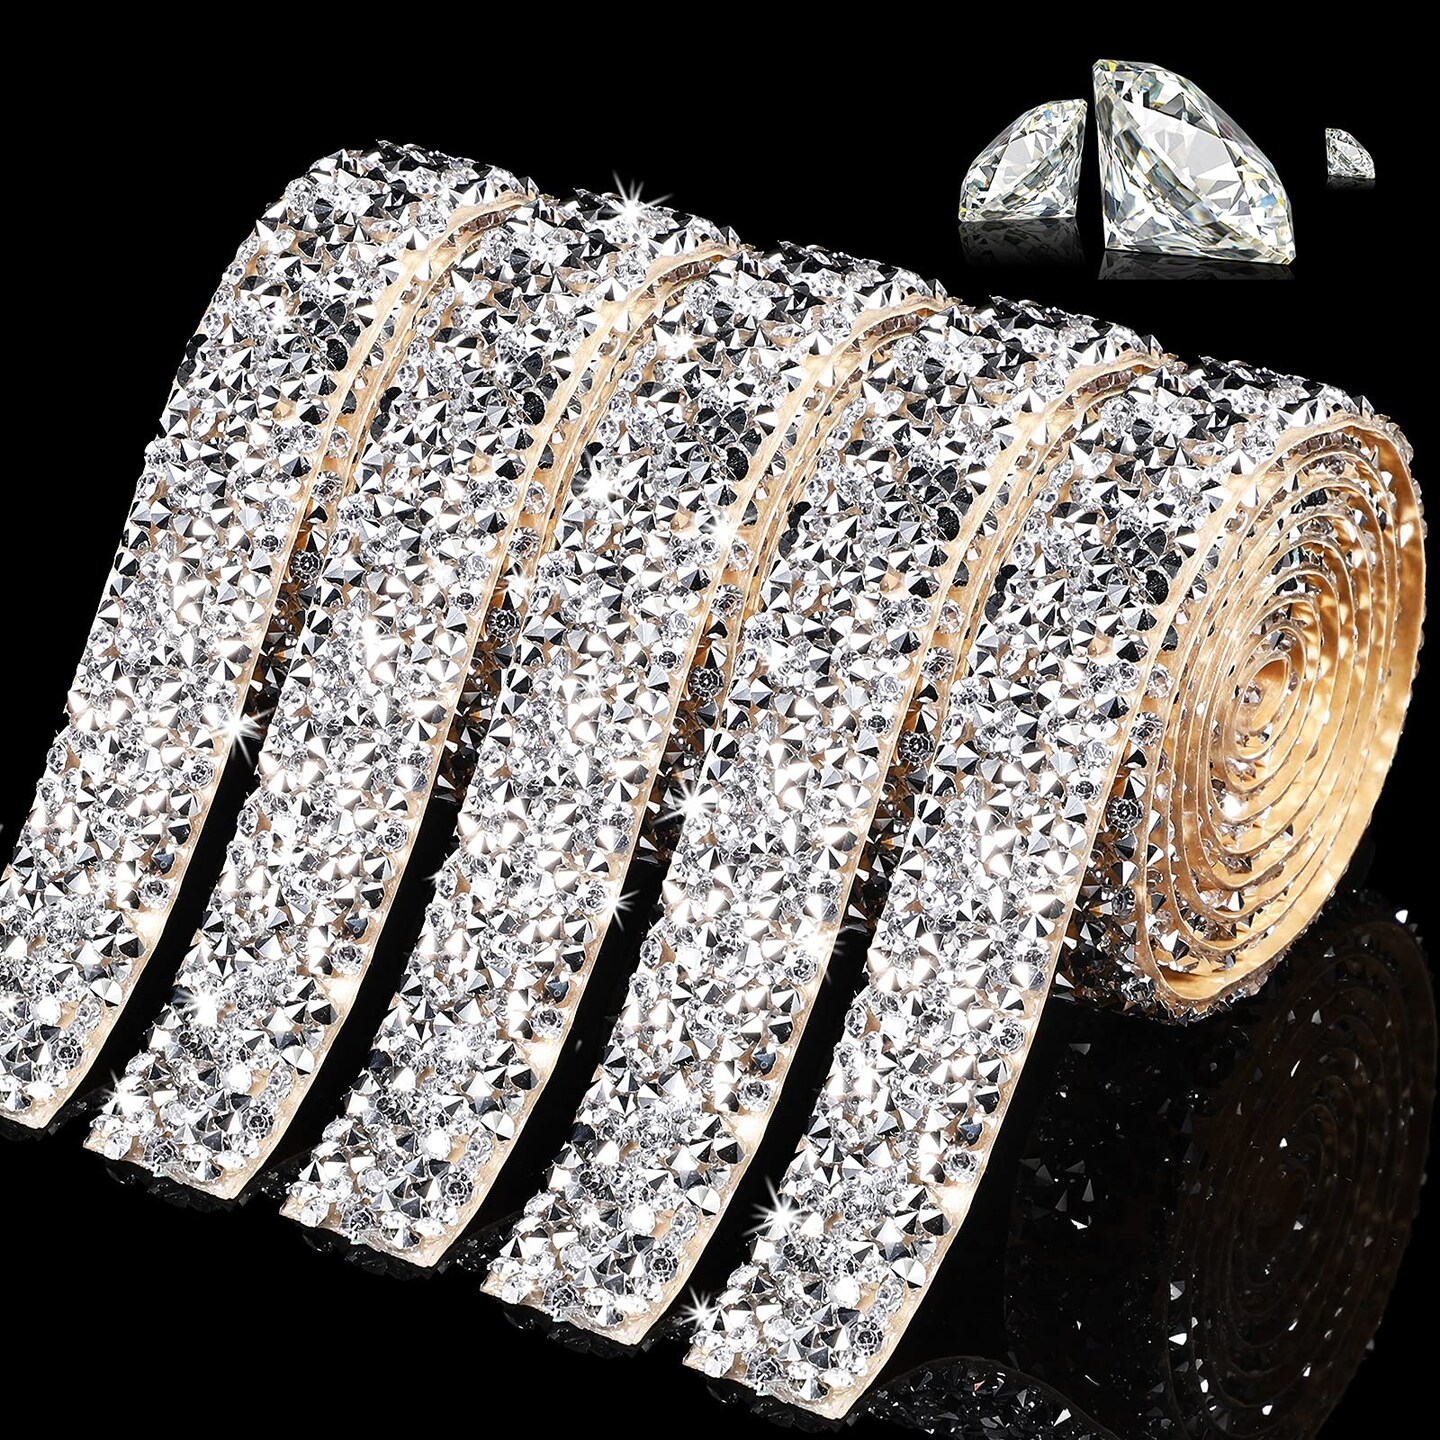 5 Rolls Crystal Rhinestone Ribbon Shiny Resin Diamond Self-Adhesive Bling Ribbon for Arts Crafts DIY Party Decor(Silver,Basic Style)